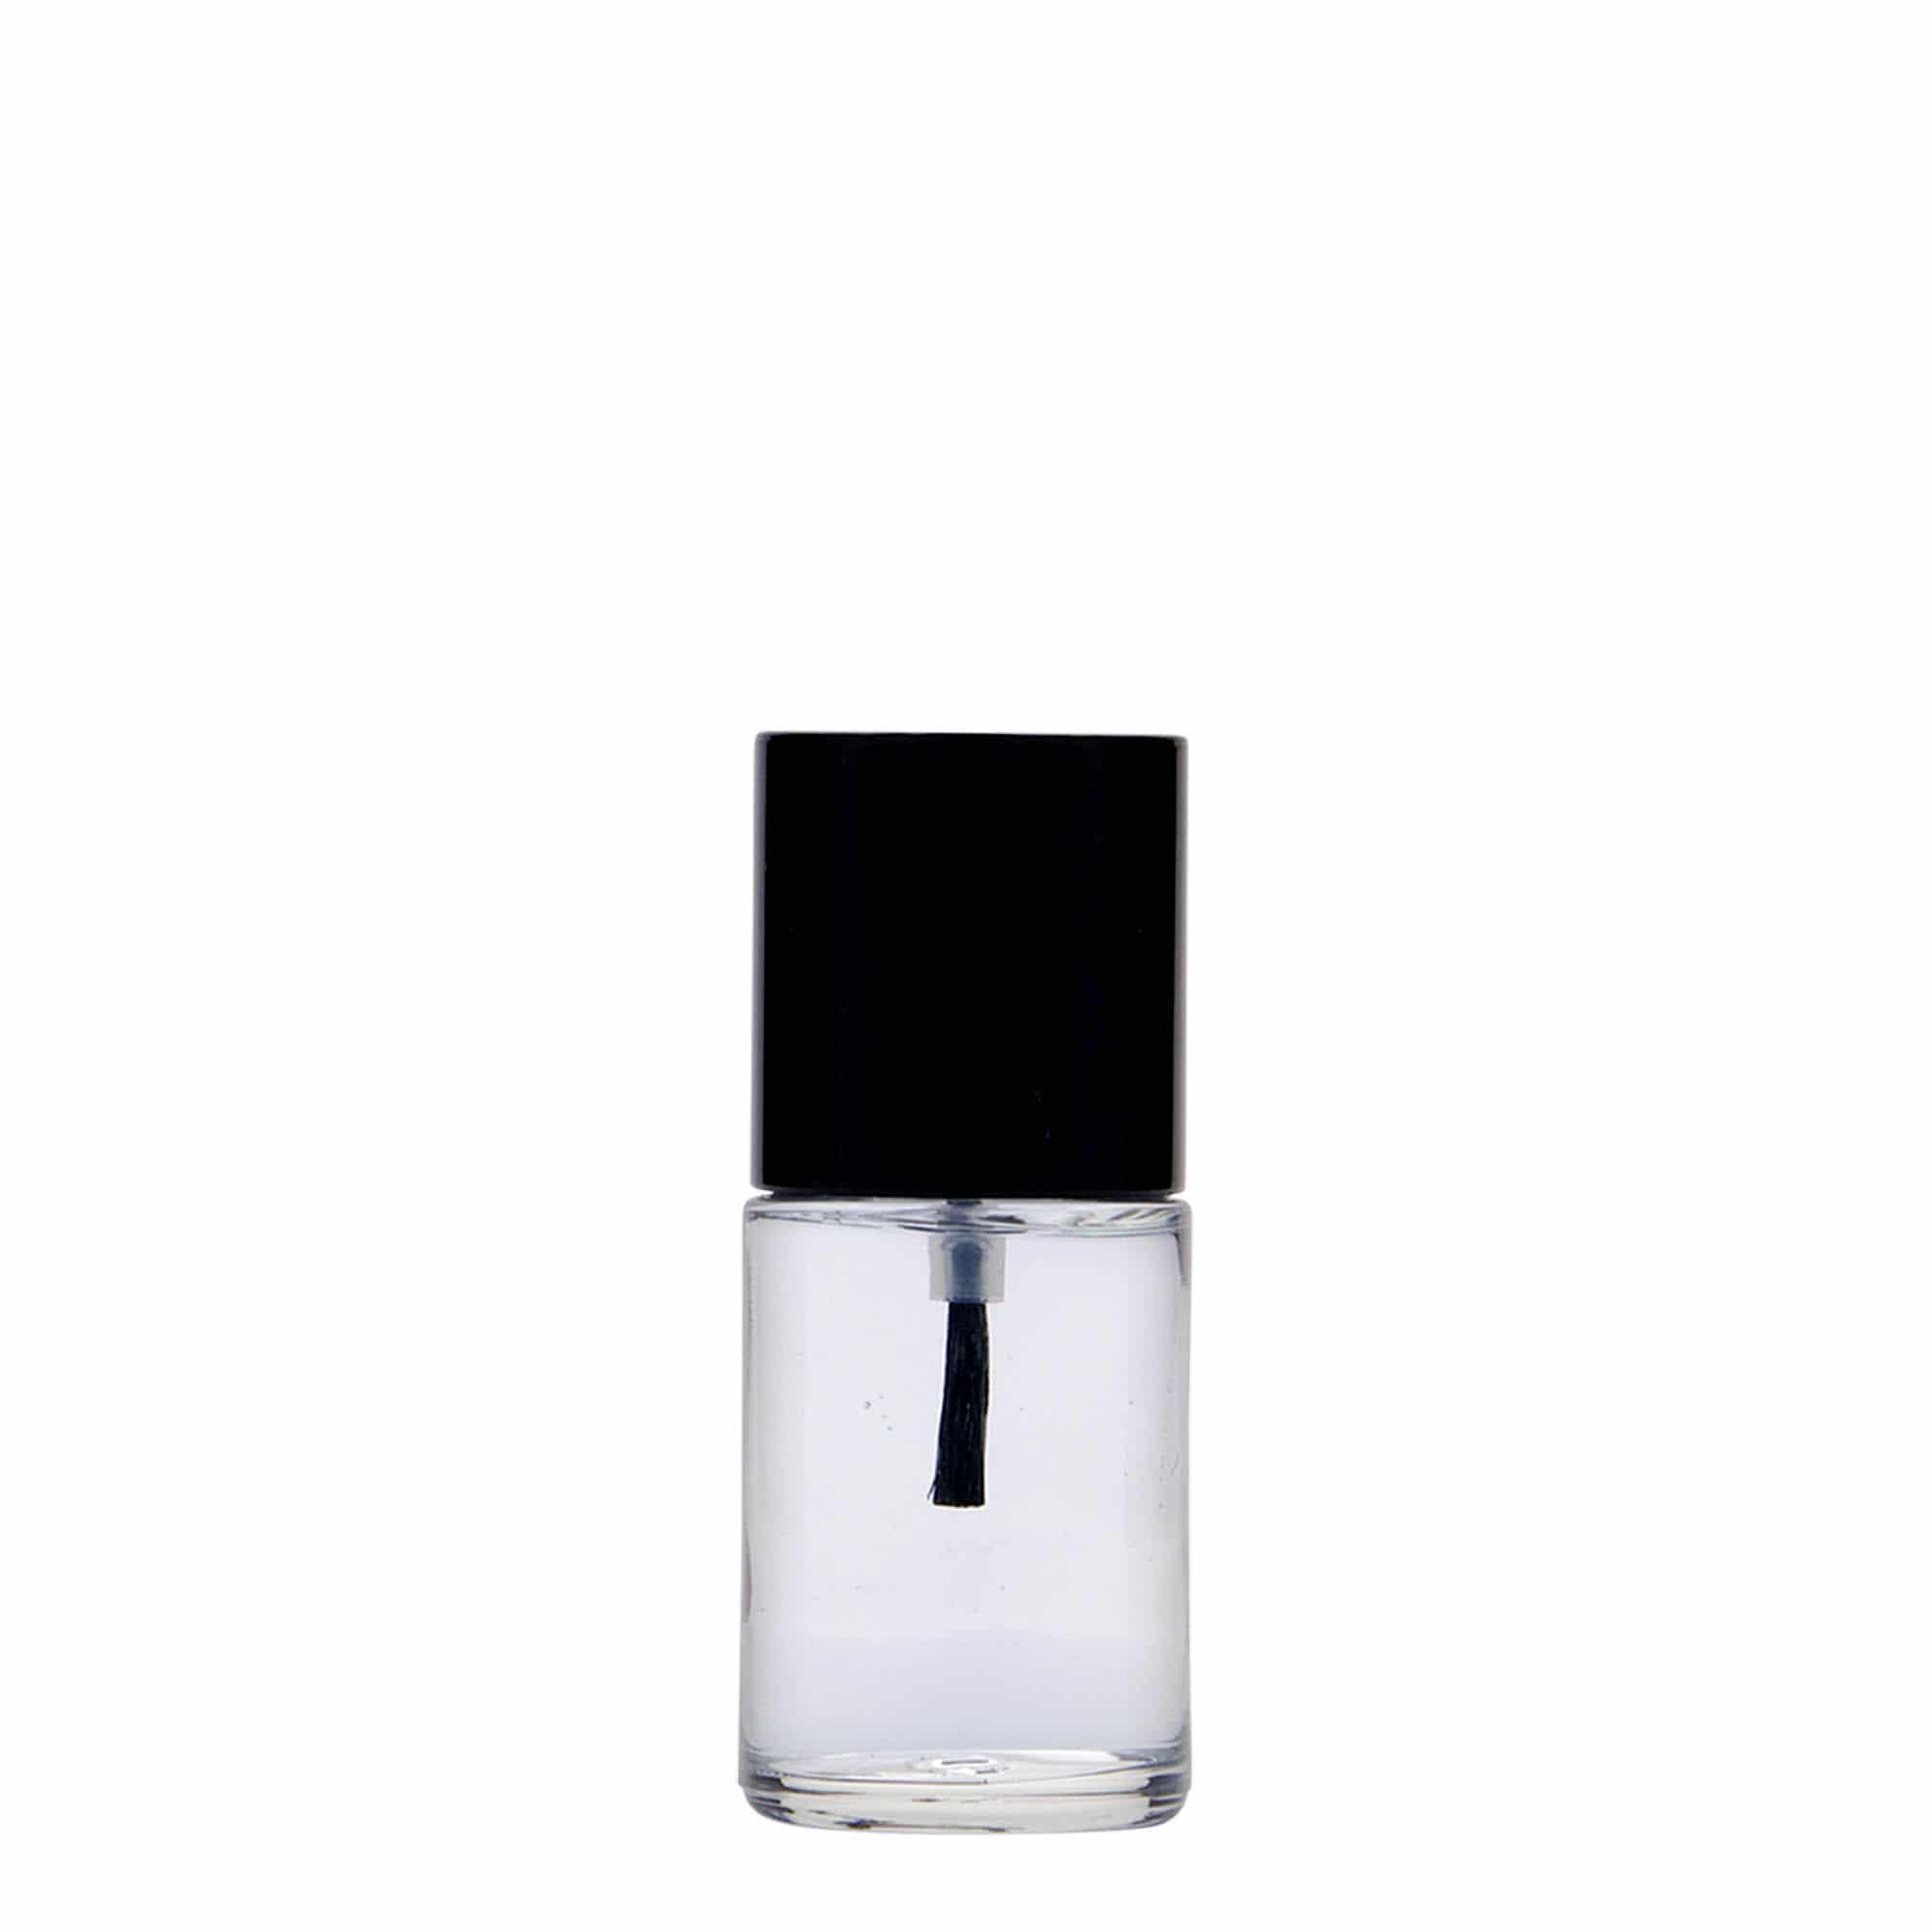 16 ml nail polish bottle 'London' with brush, glass